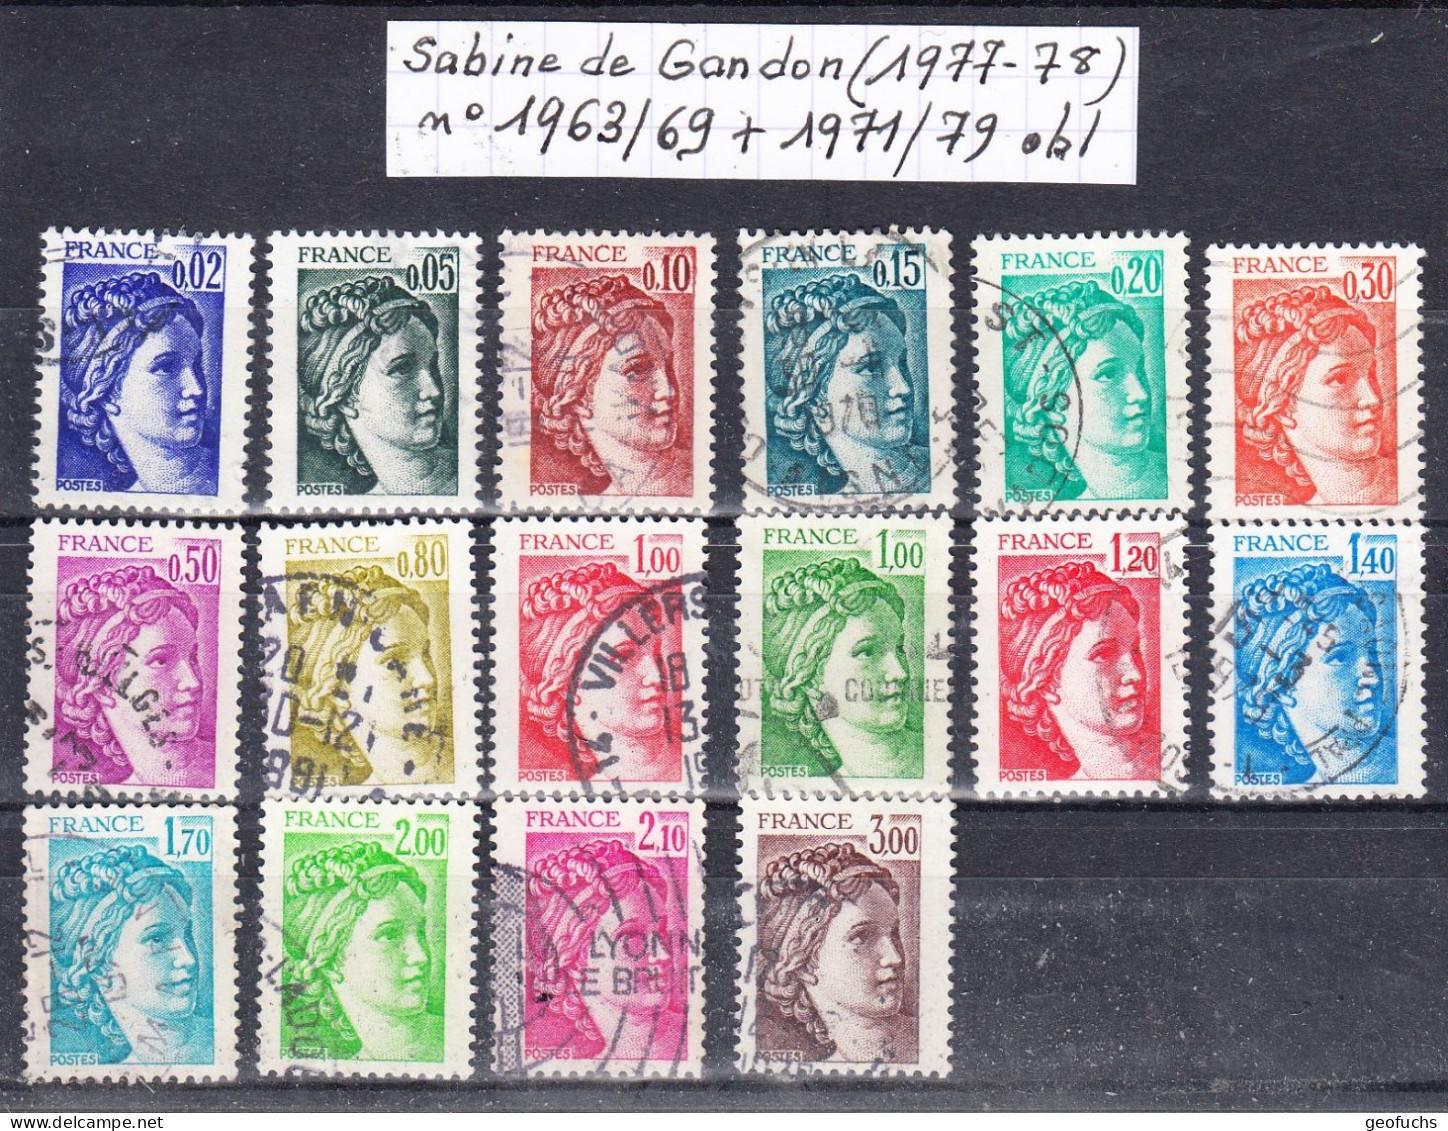 France Sabine De Gandon (1977-78) Y/T N°1963/69 + 1971/79 Oblitérés - 1977-1981 Sabina Di Gandon